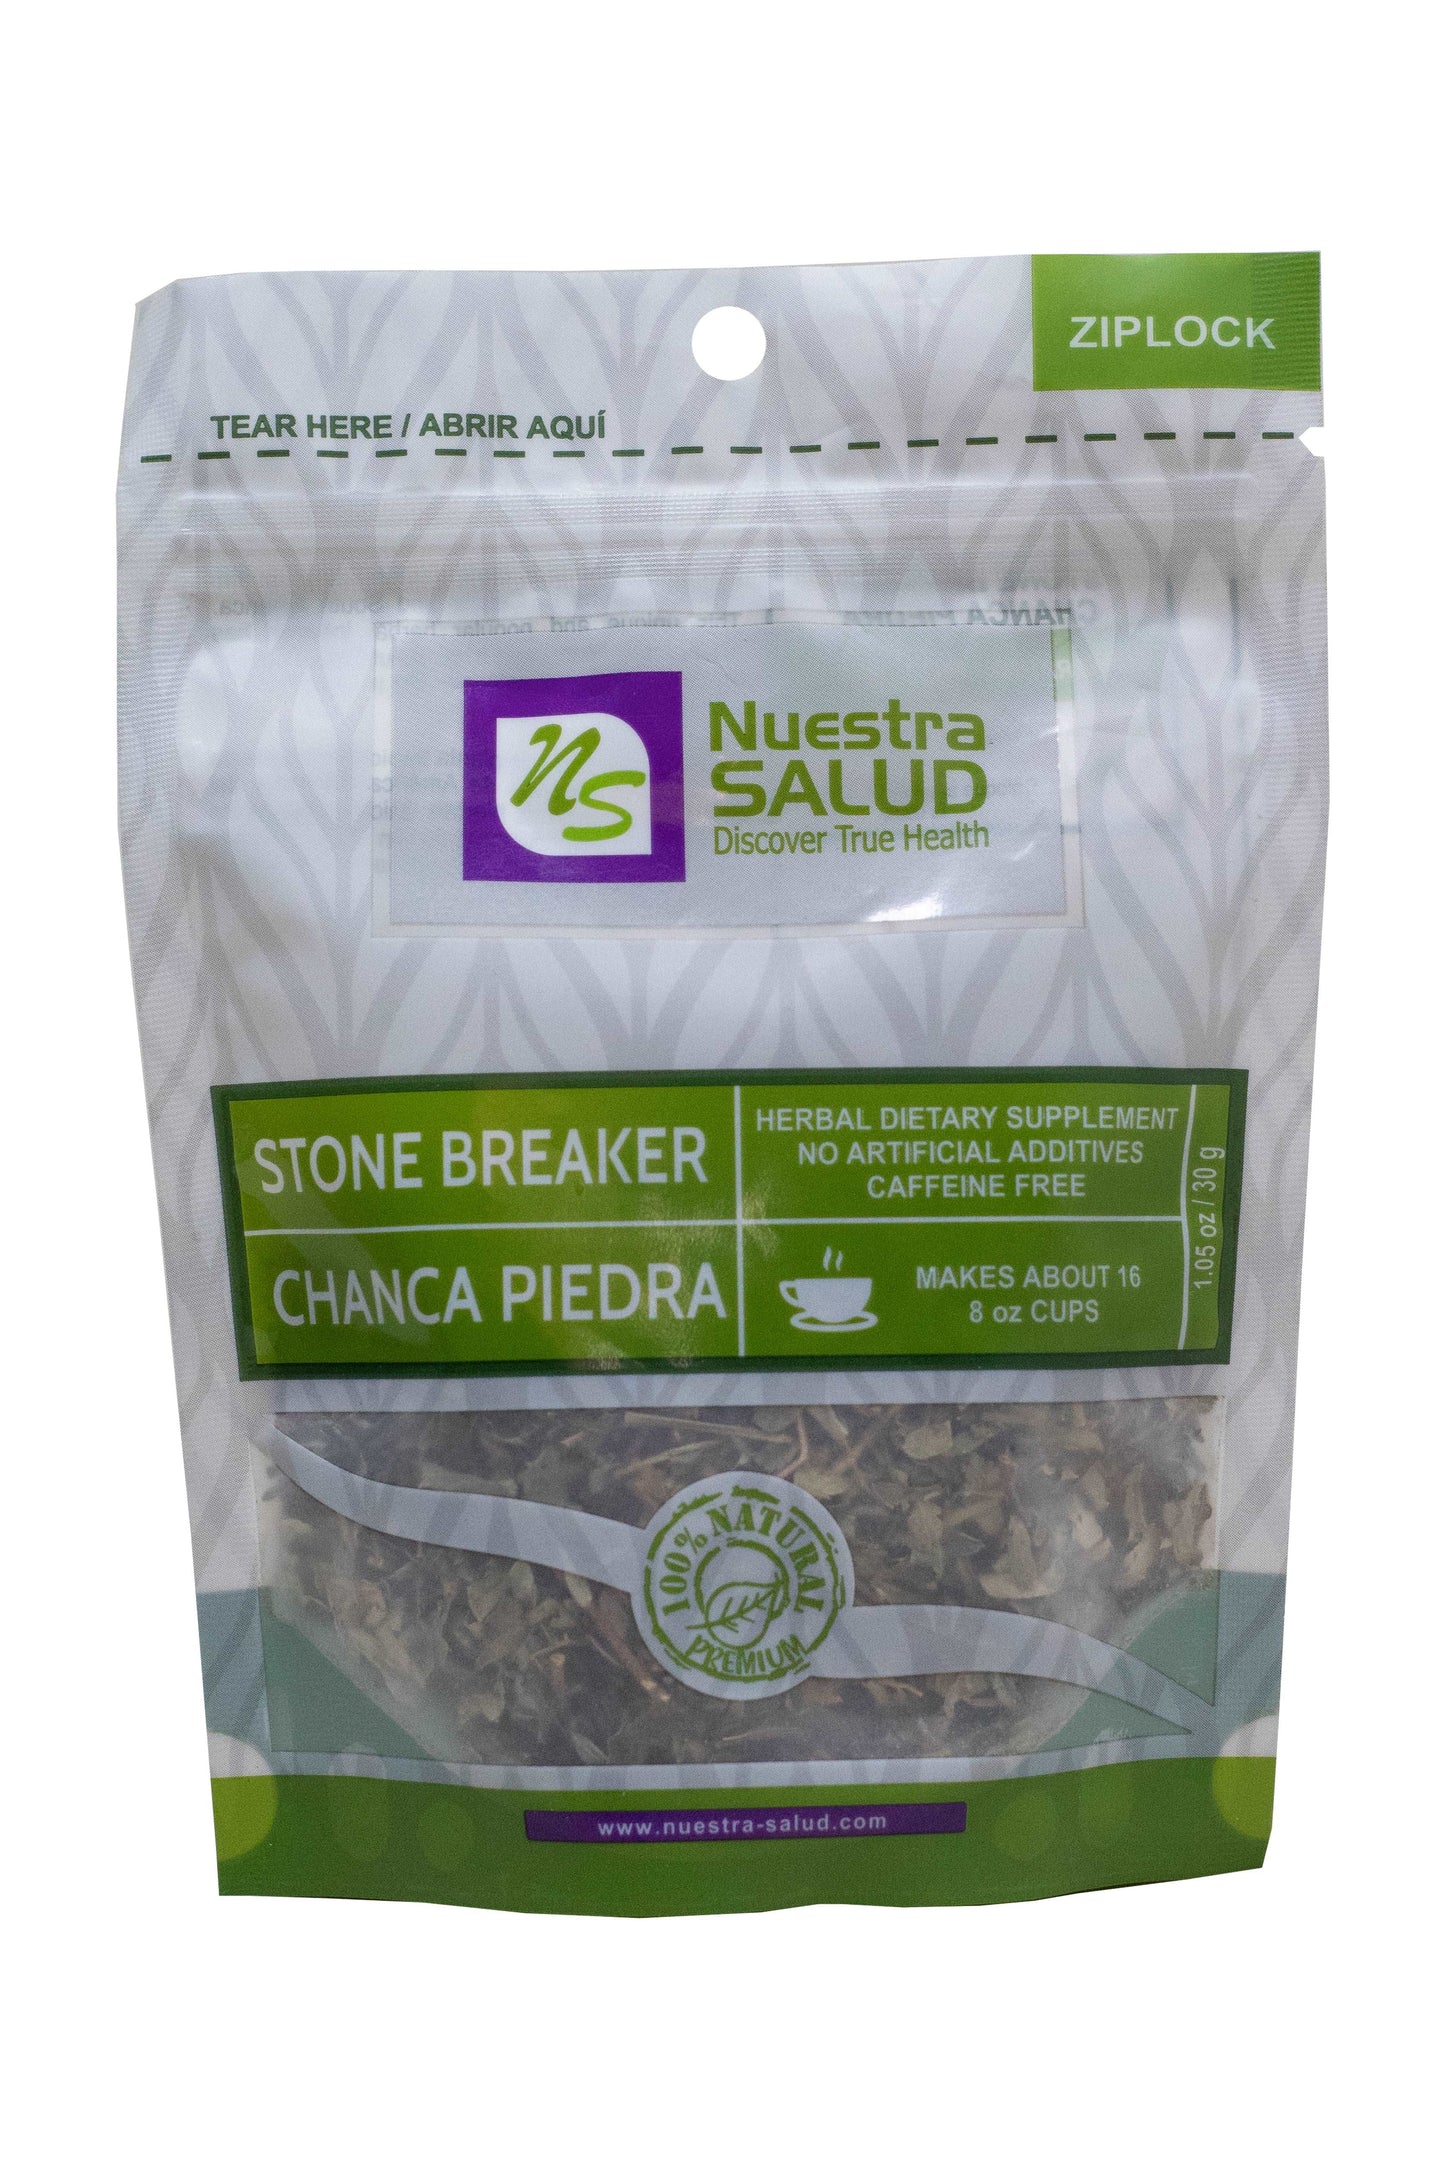  Chanca Piedra Stonebreaker Herb Tea Value Pack (120g) by Nuestra Salud sold by NS Herbs Co.